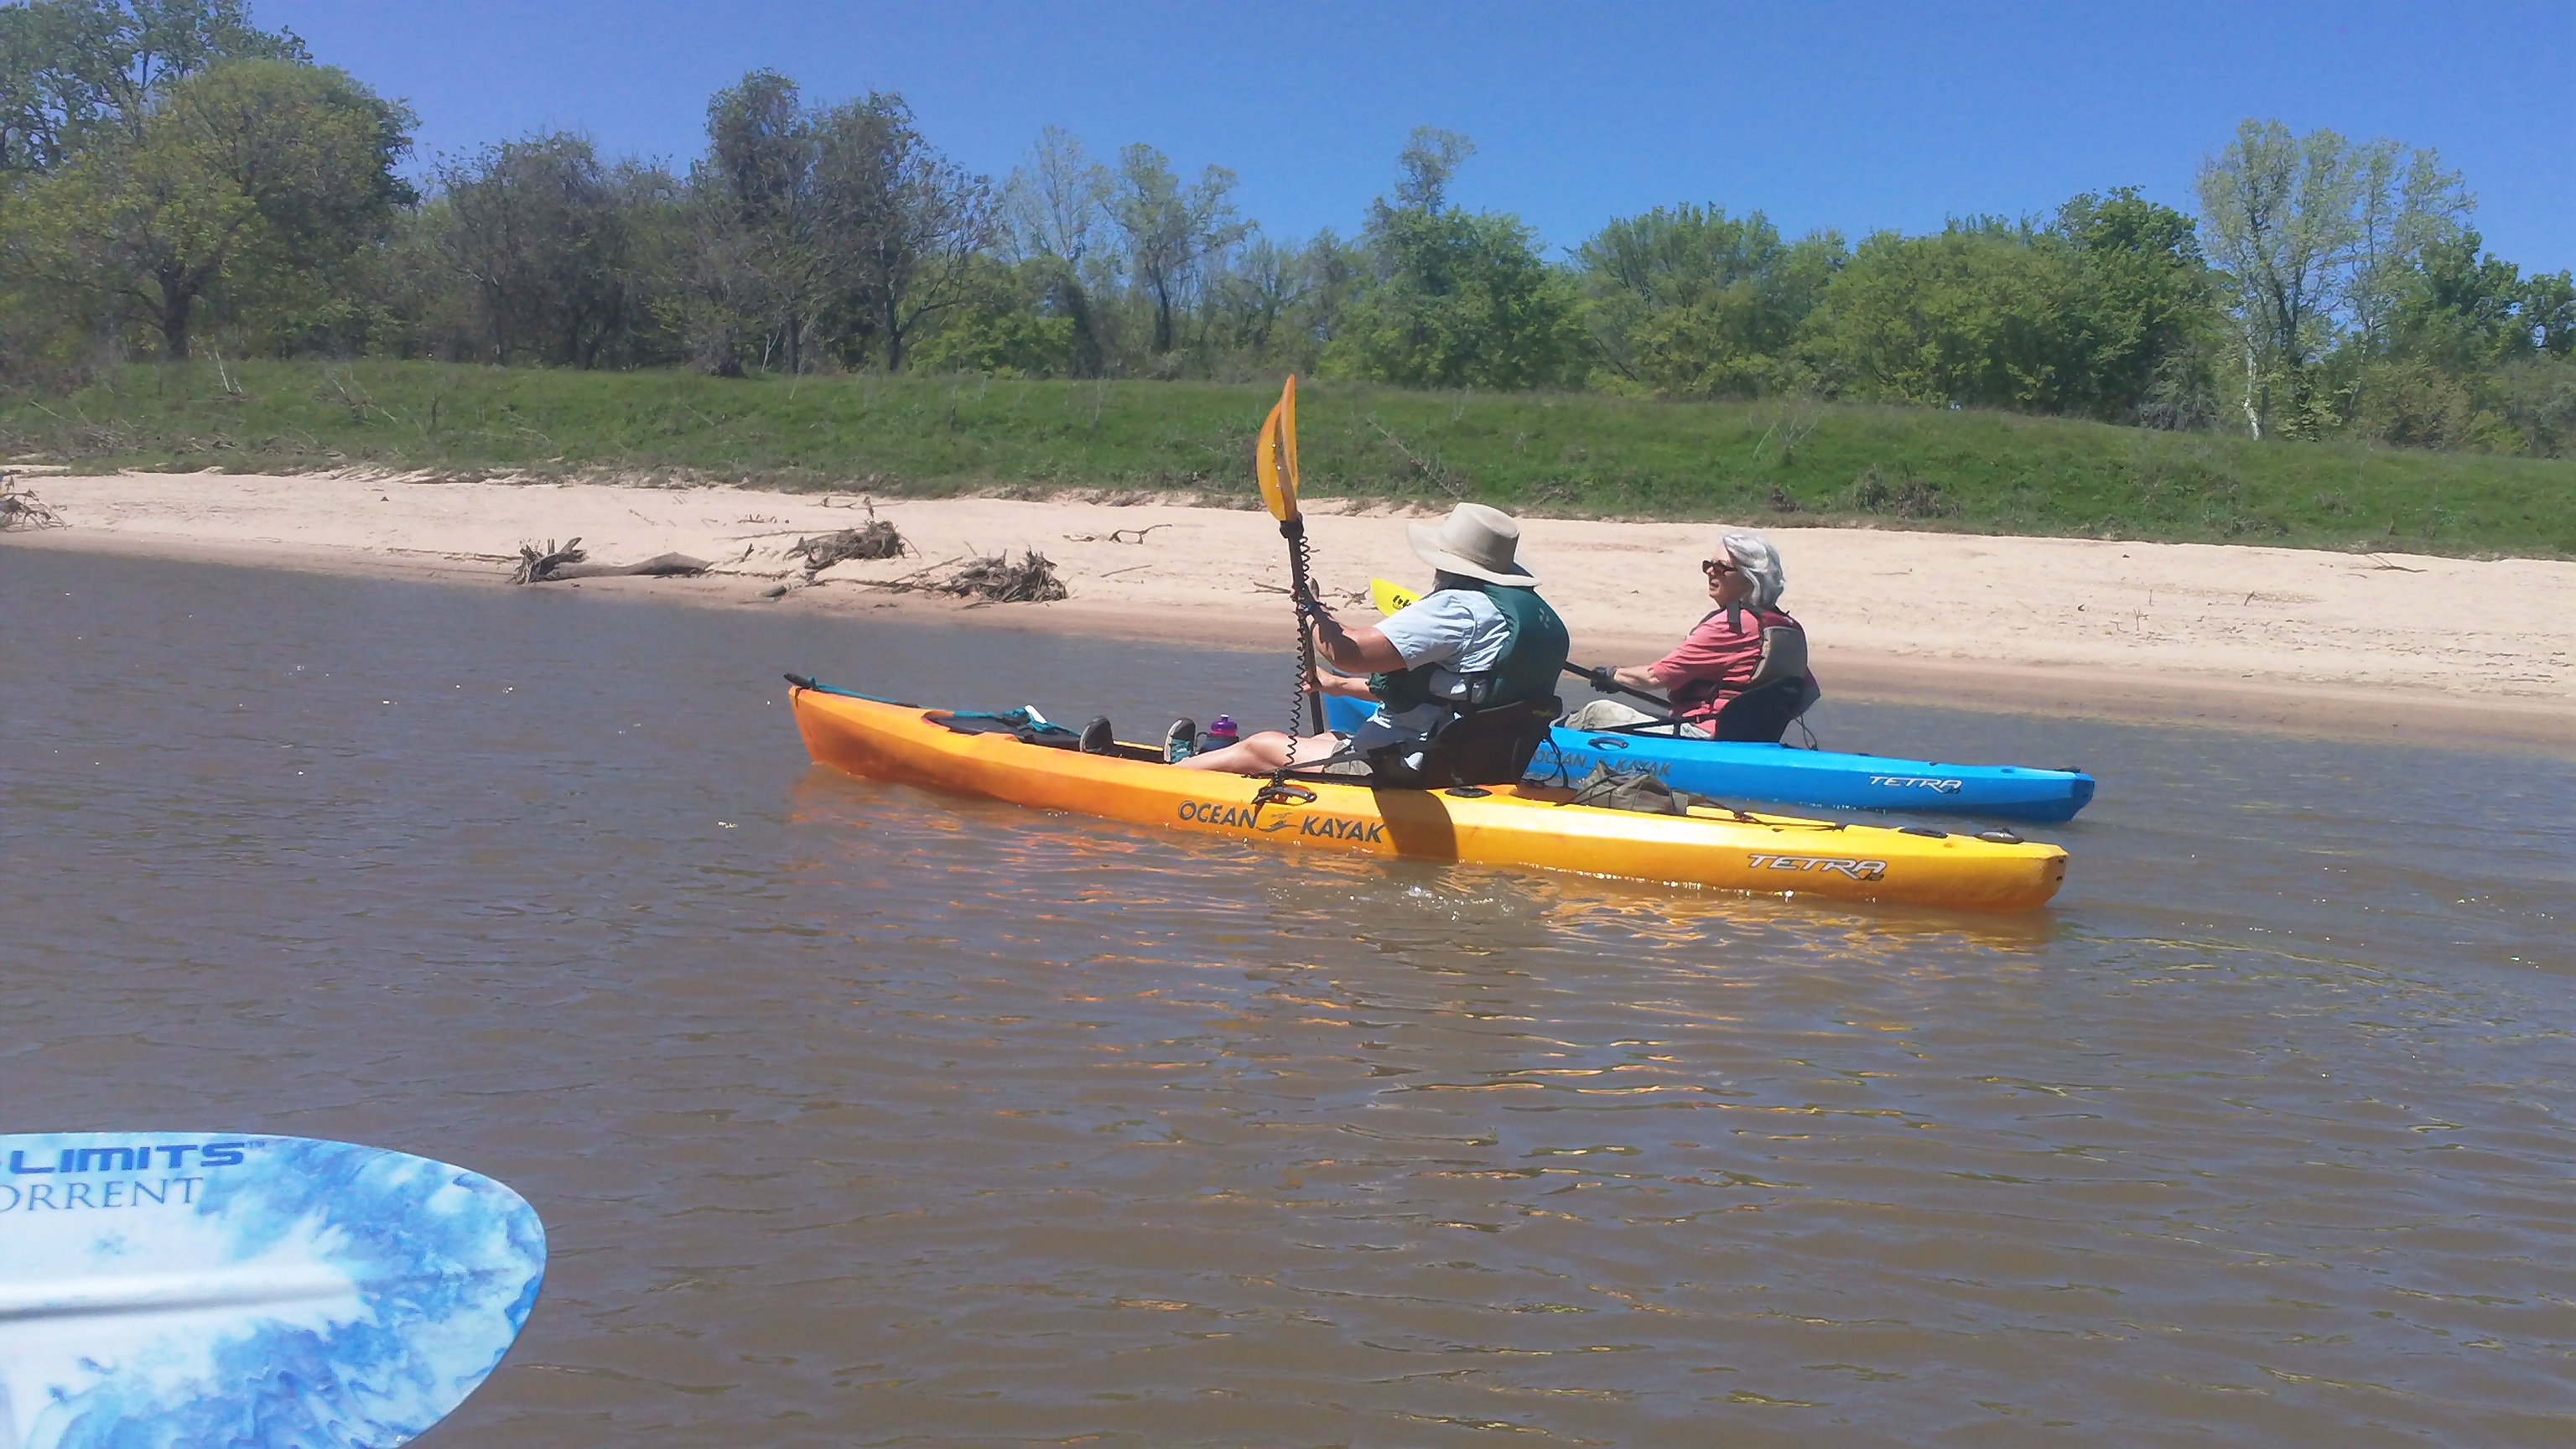 https://kayakingtexas.wordpress.com/wp-content/uploads/2015/03/colorado-river-columbus-look-023.jpg